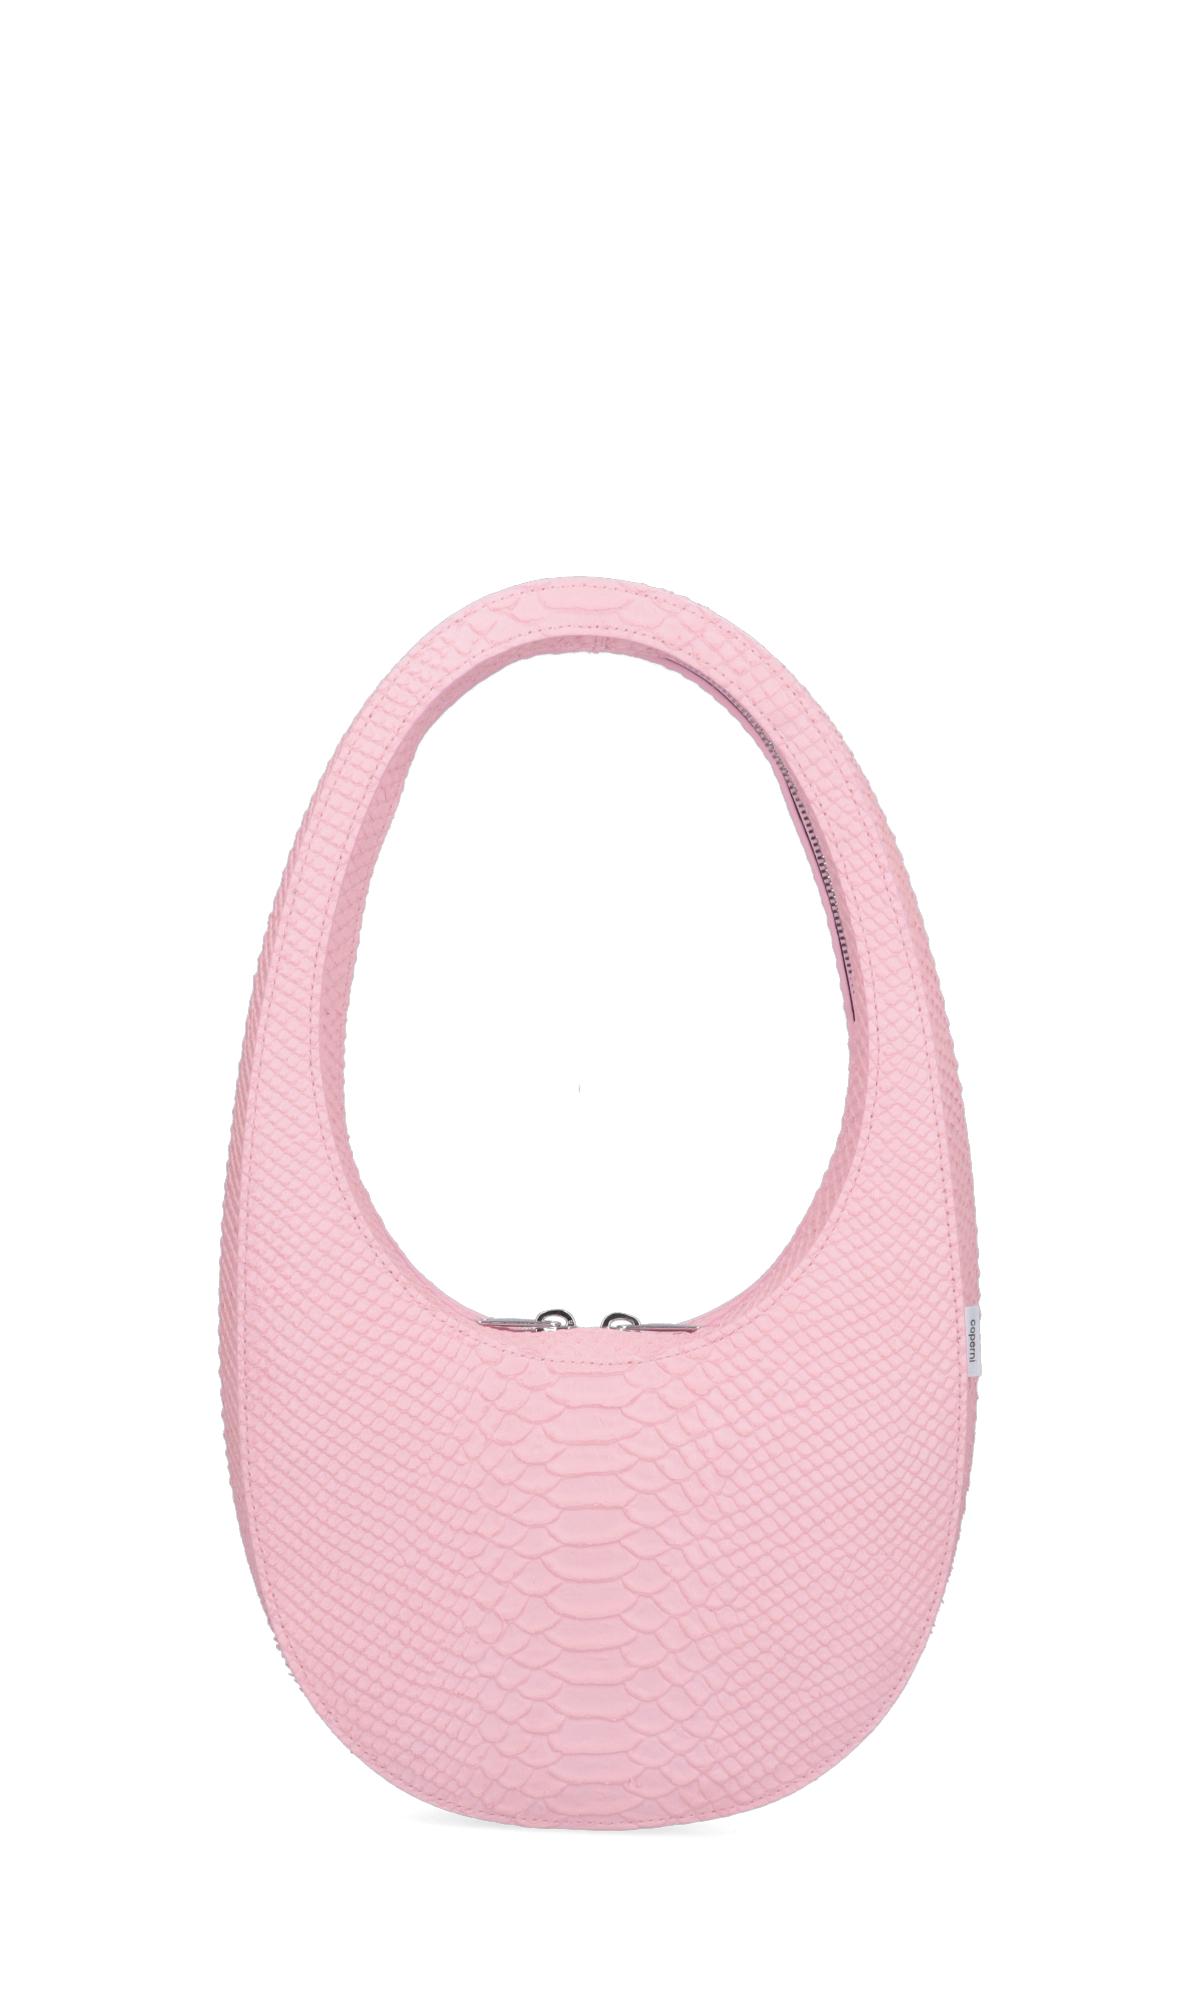 Womens Tote bags Coperni Tote bags Coperni swipe Hand Bag in Pink Save 9% 